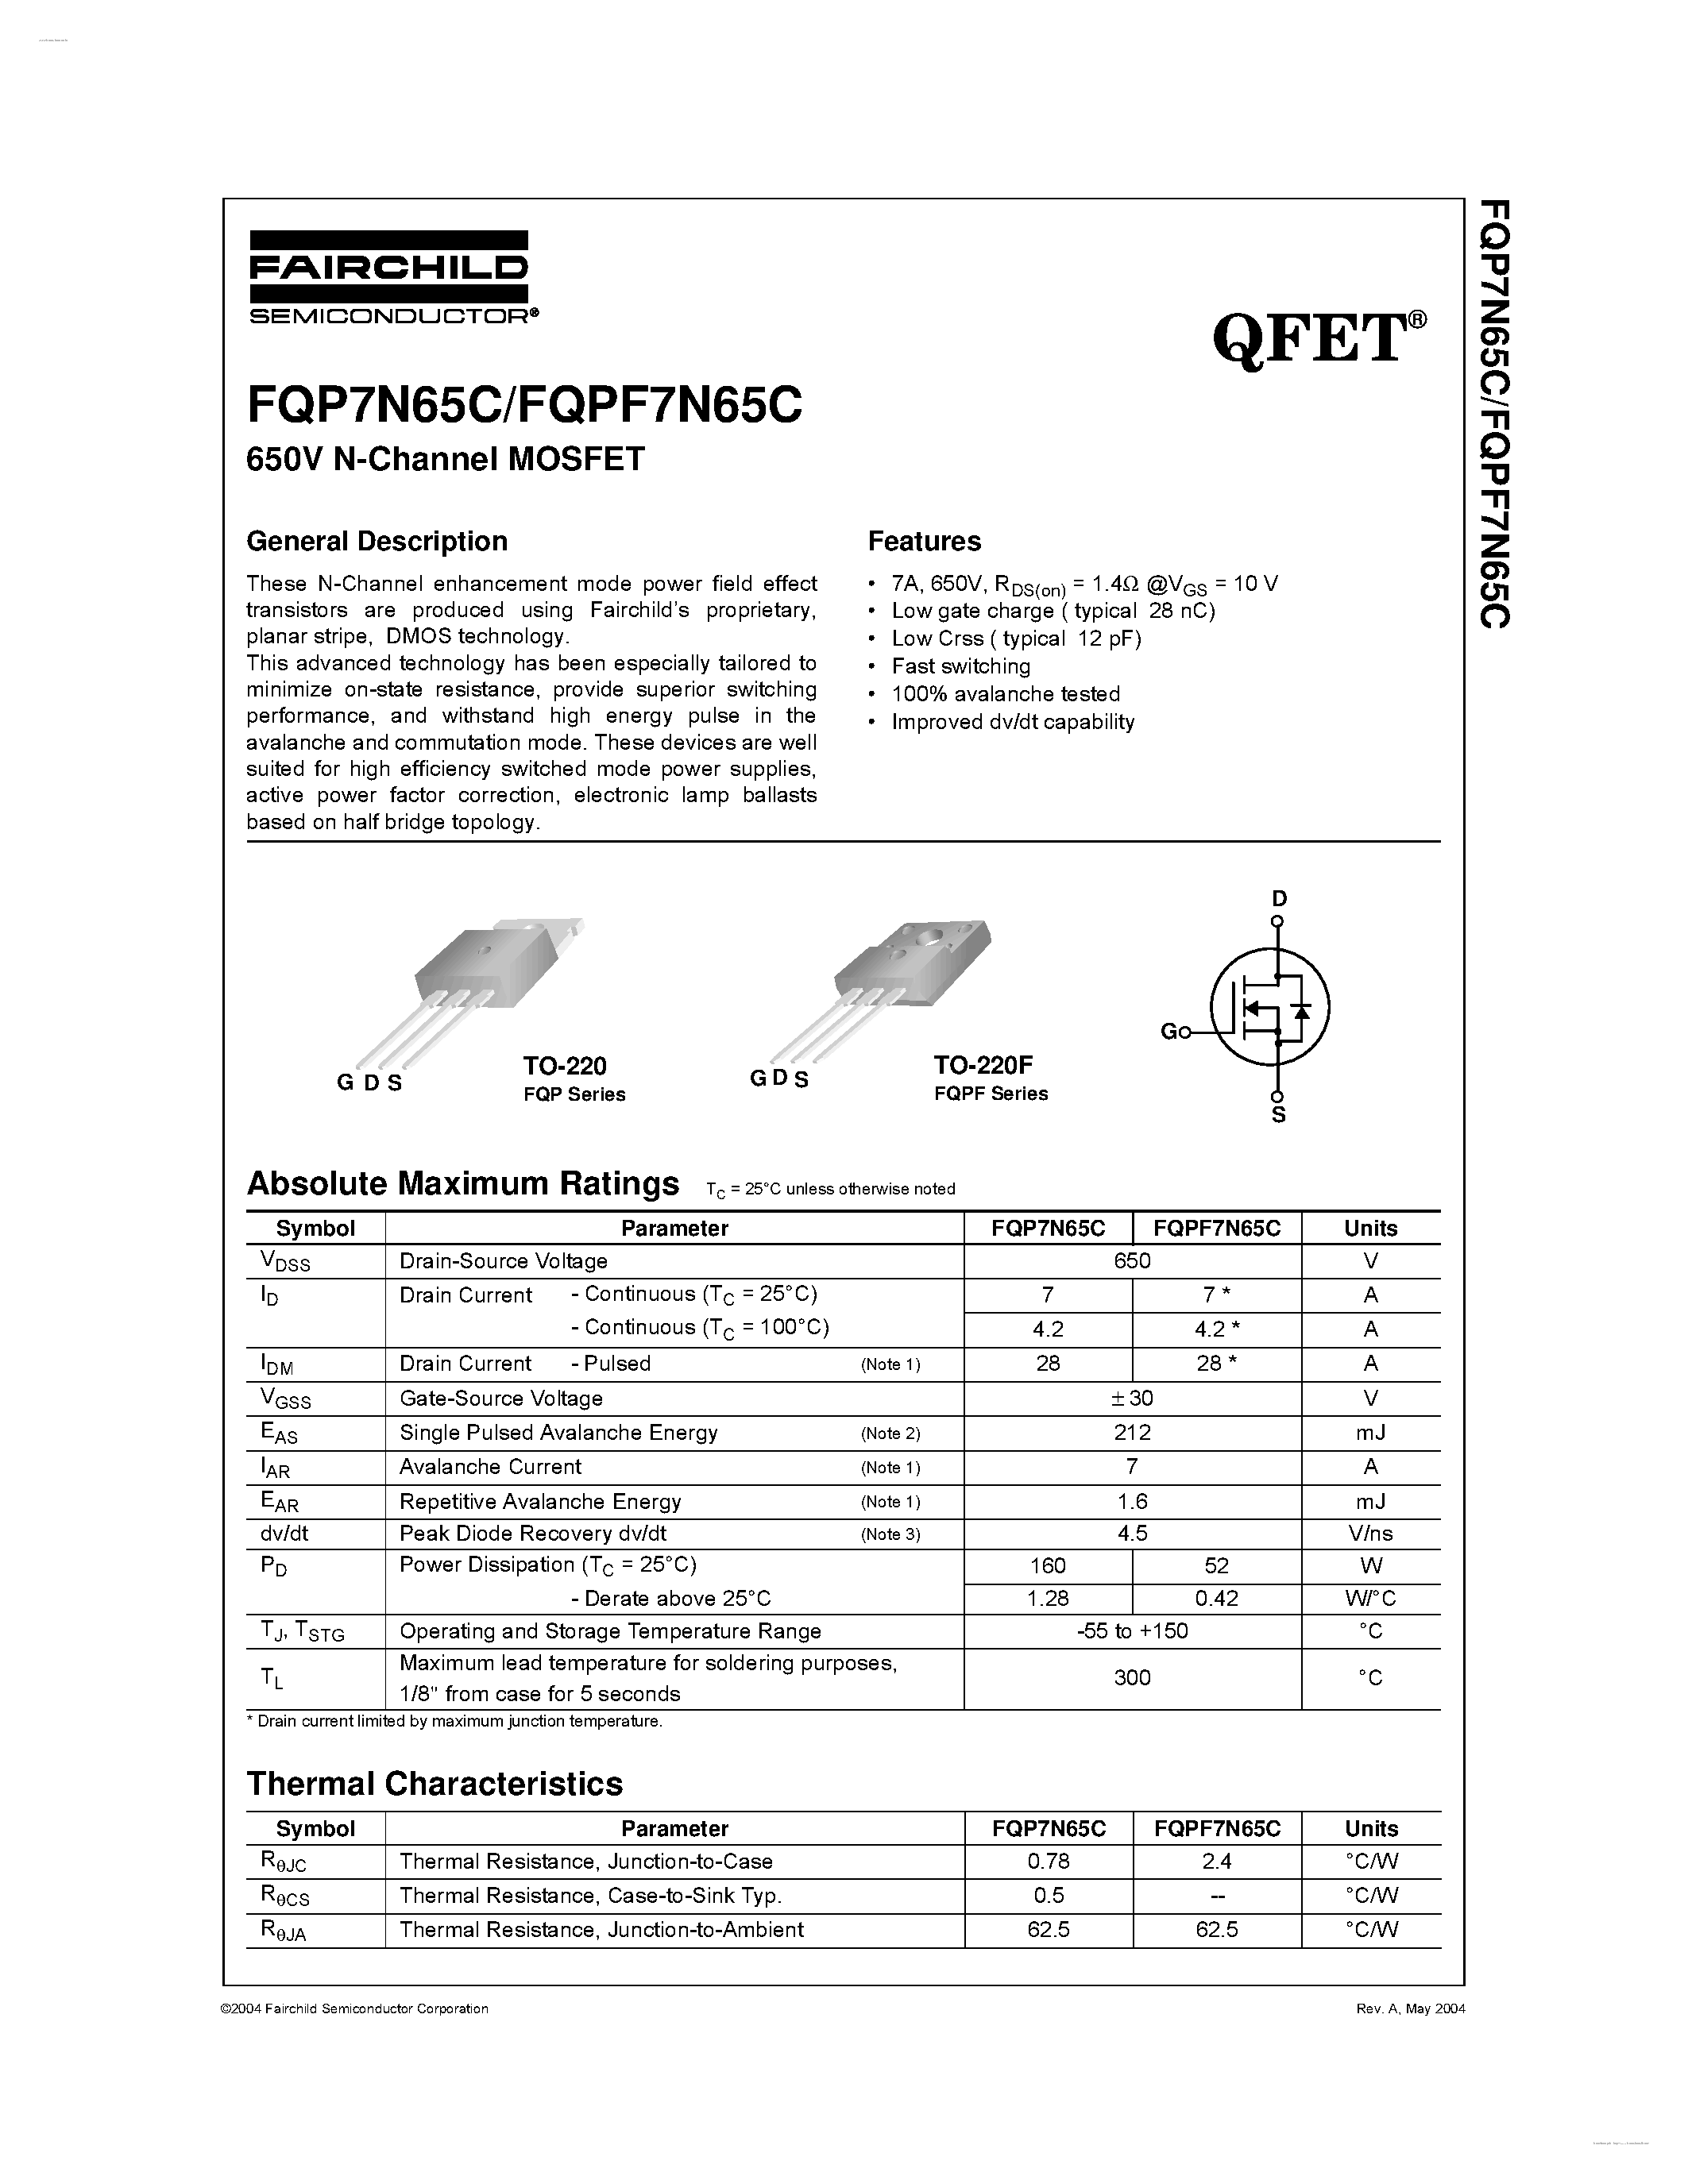 Datasheet FQPF7N65C - 650V N-Channel MOSFET page 1